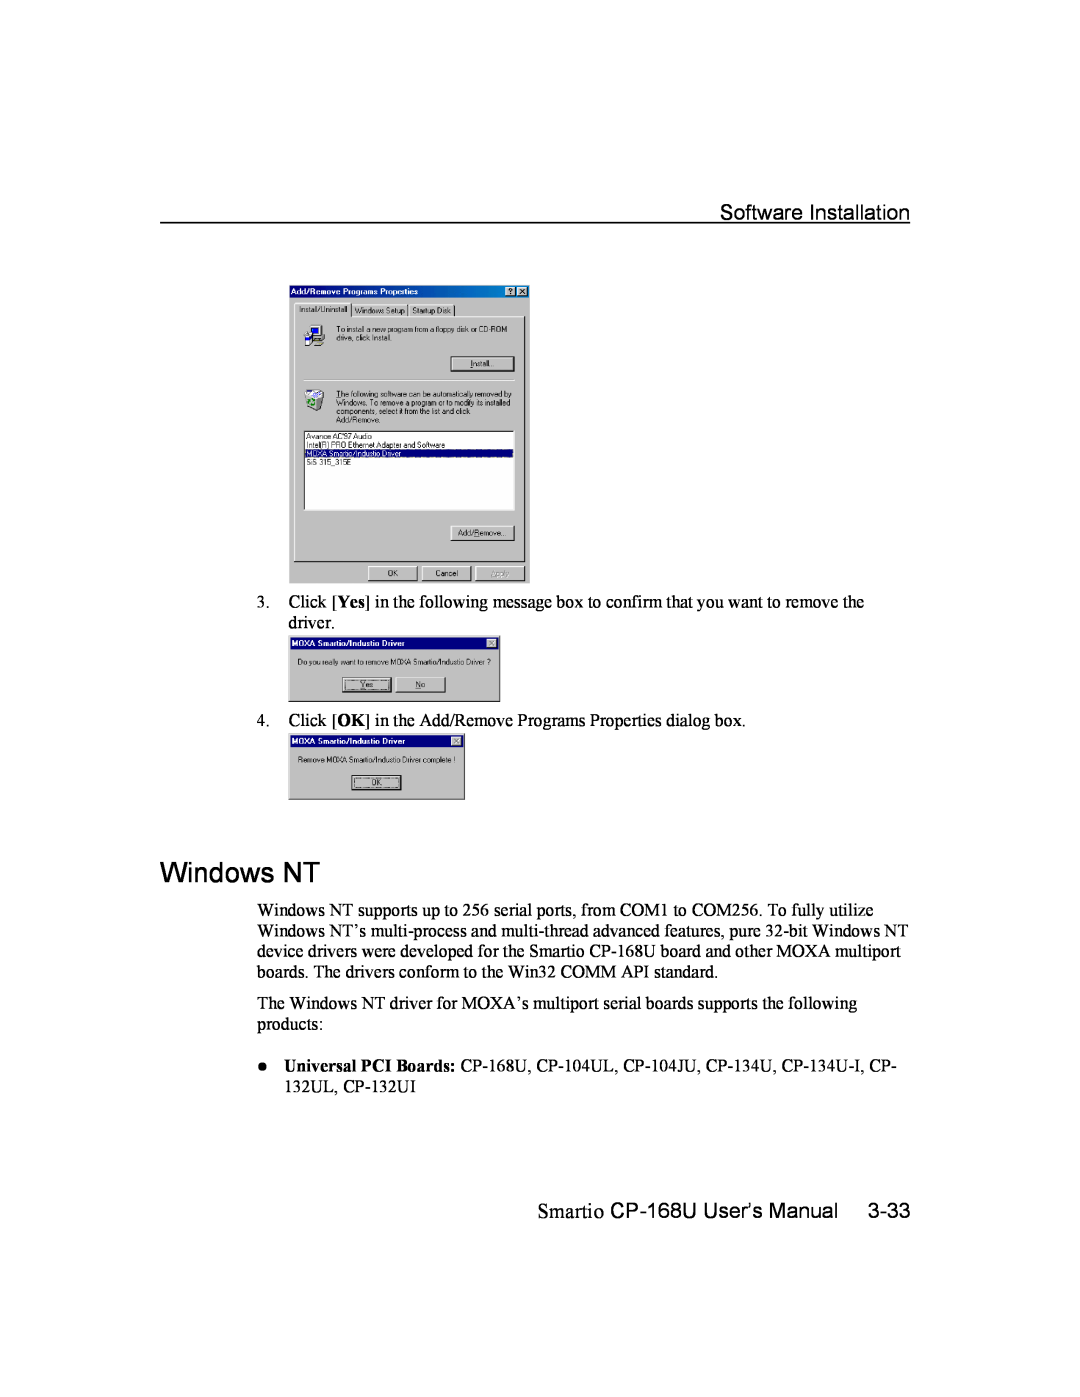 Moxa Technologies user manual Windows NT, Software Installation, Smartio CP-168U User’s Manual 